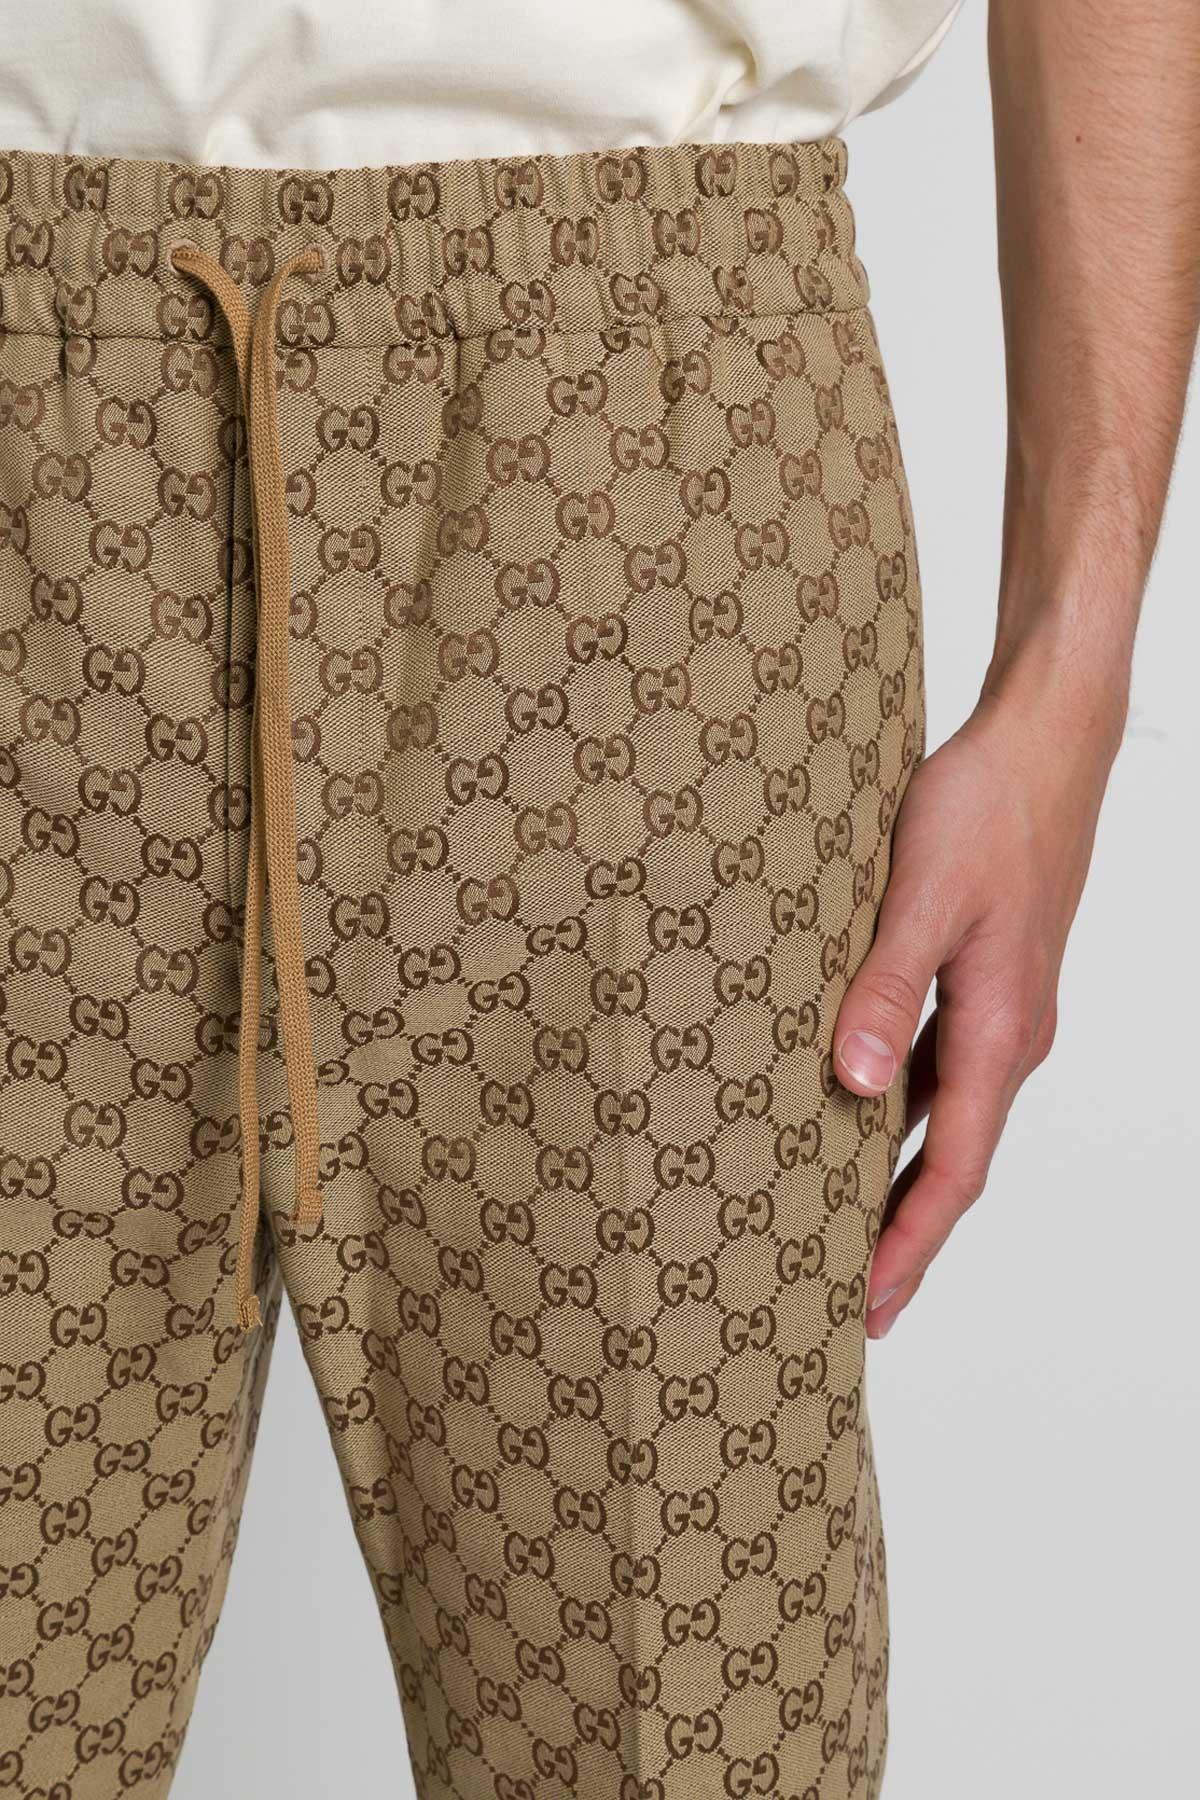 Gucci Jumbo GG Canvas Pant, Size 46 It, Black, Ready-to-wear